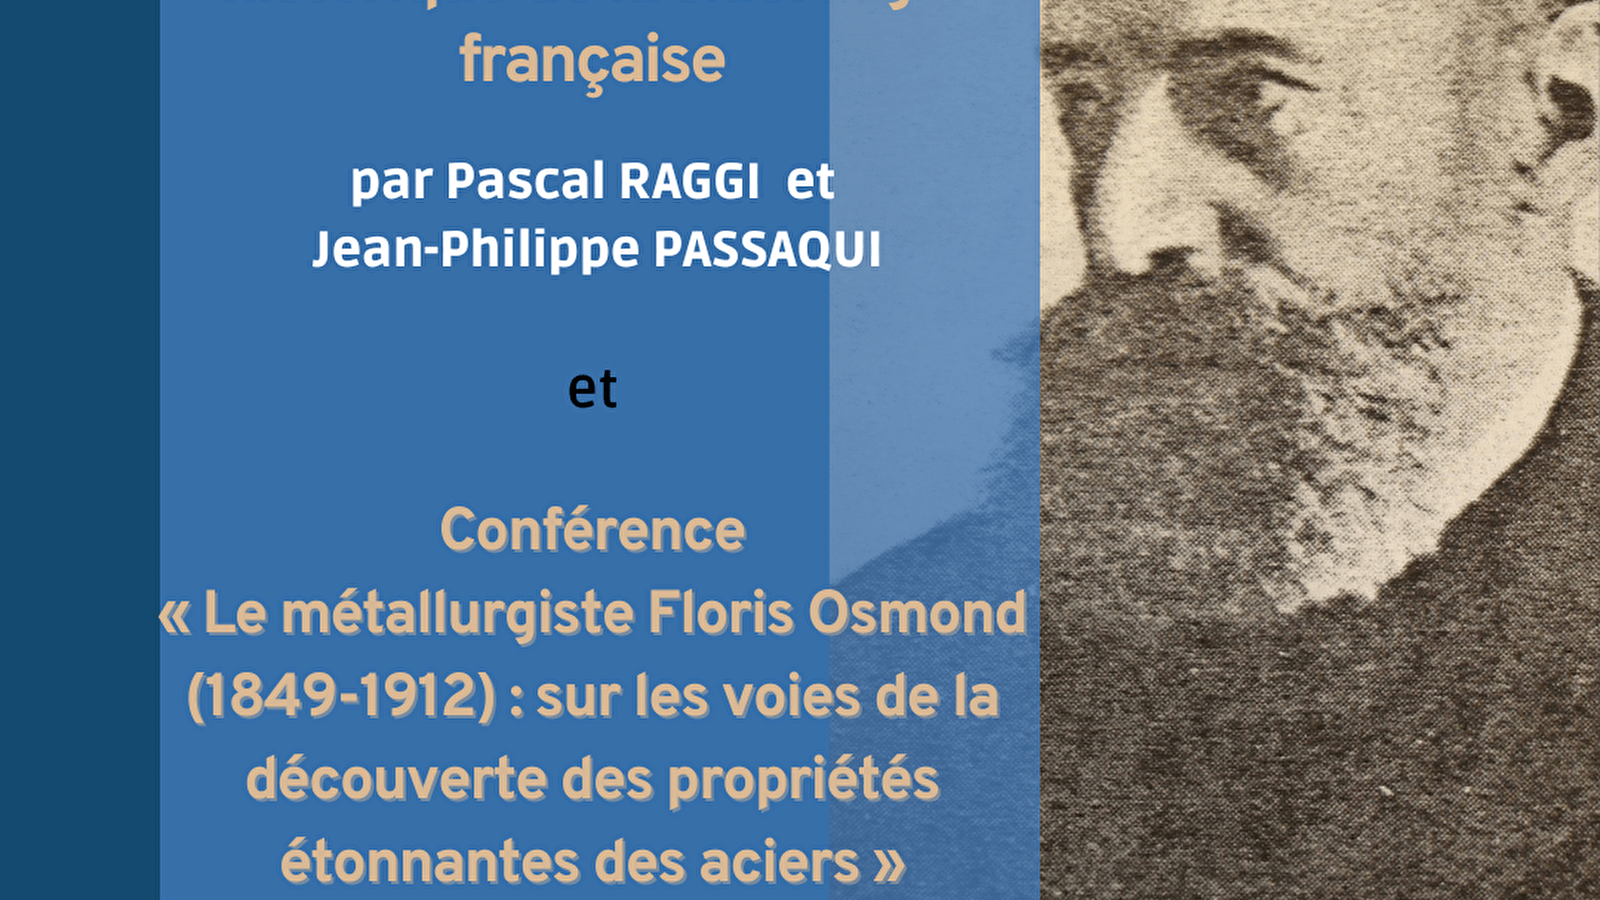 Presentation of the Dictionnaire de la sidérurgie française and lecture on F. Osmond